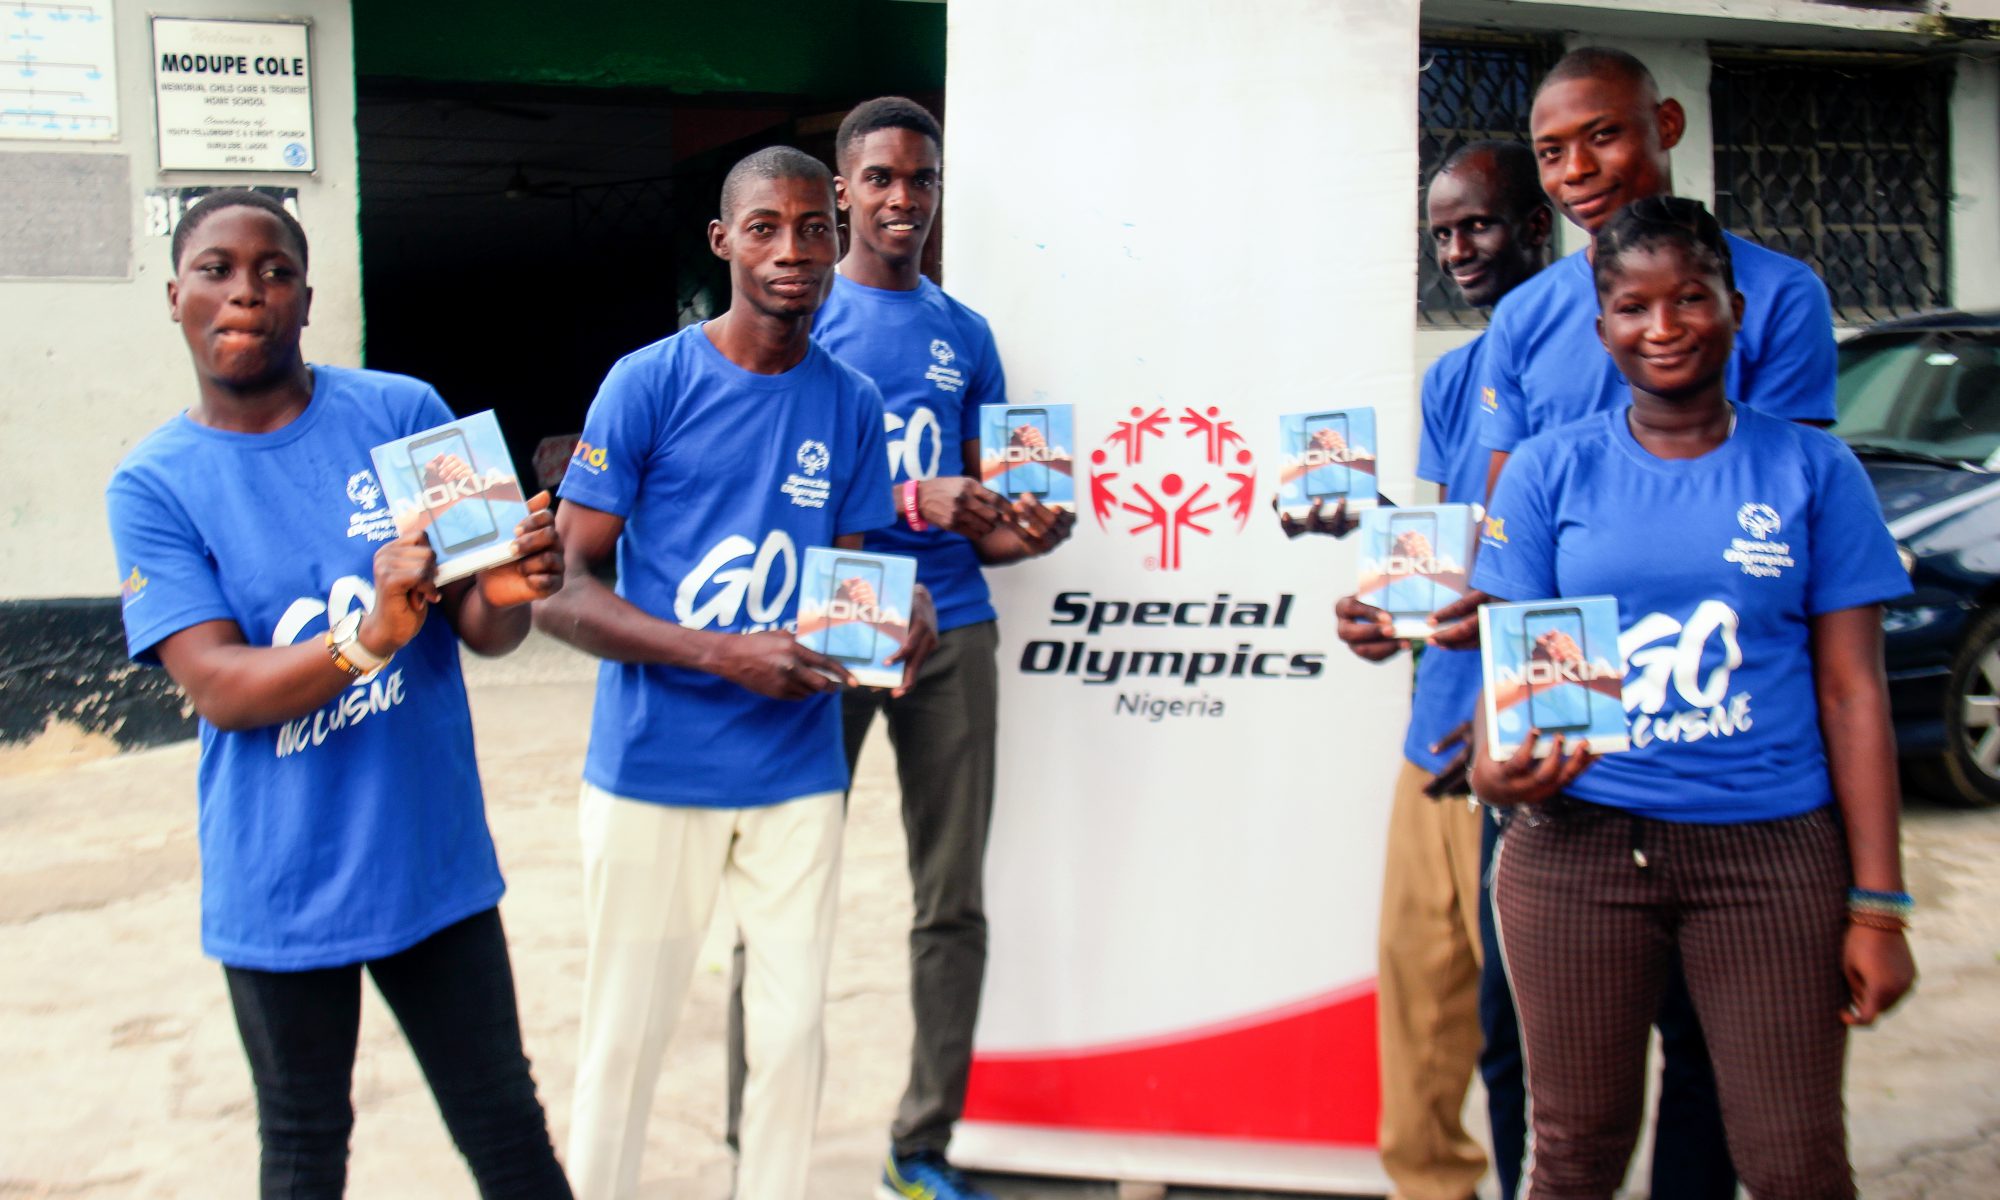 Special Olympics Nigeria Athletes with their Nokia C1 phones